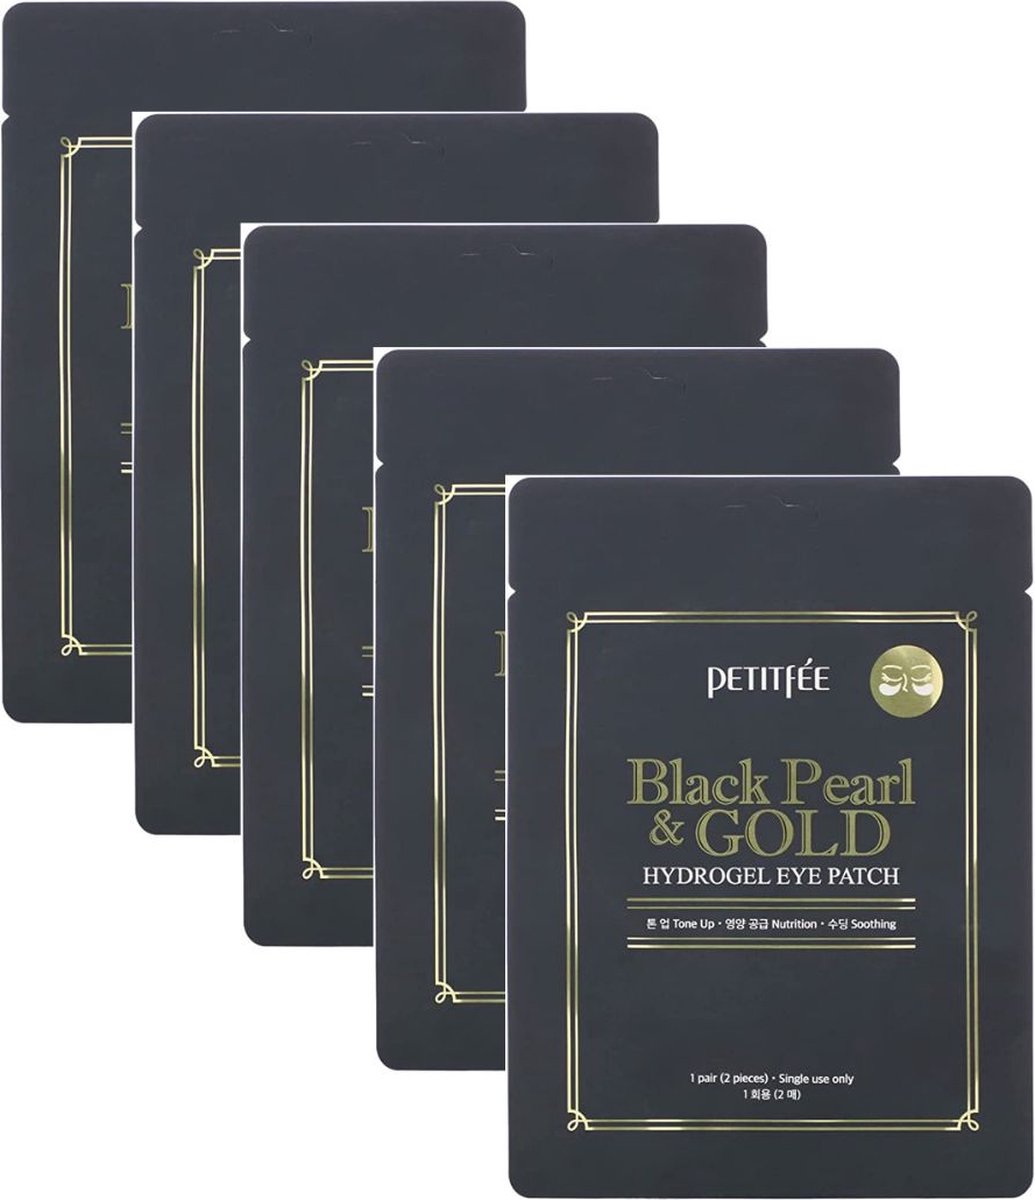 Petitfee Black Pearl & Gold Hydrogel Eye Patch (1 pair, single use) 5 PACK - Korean skincare